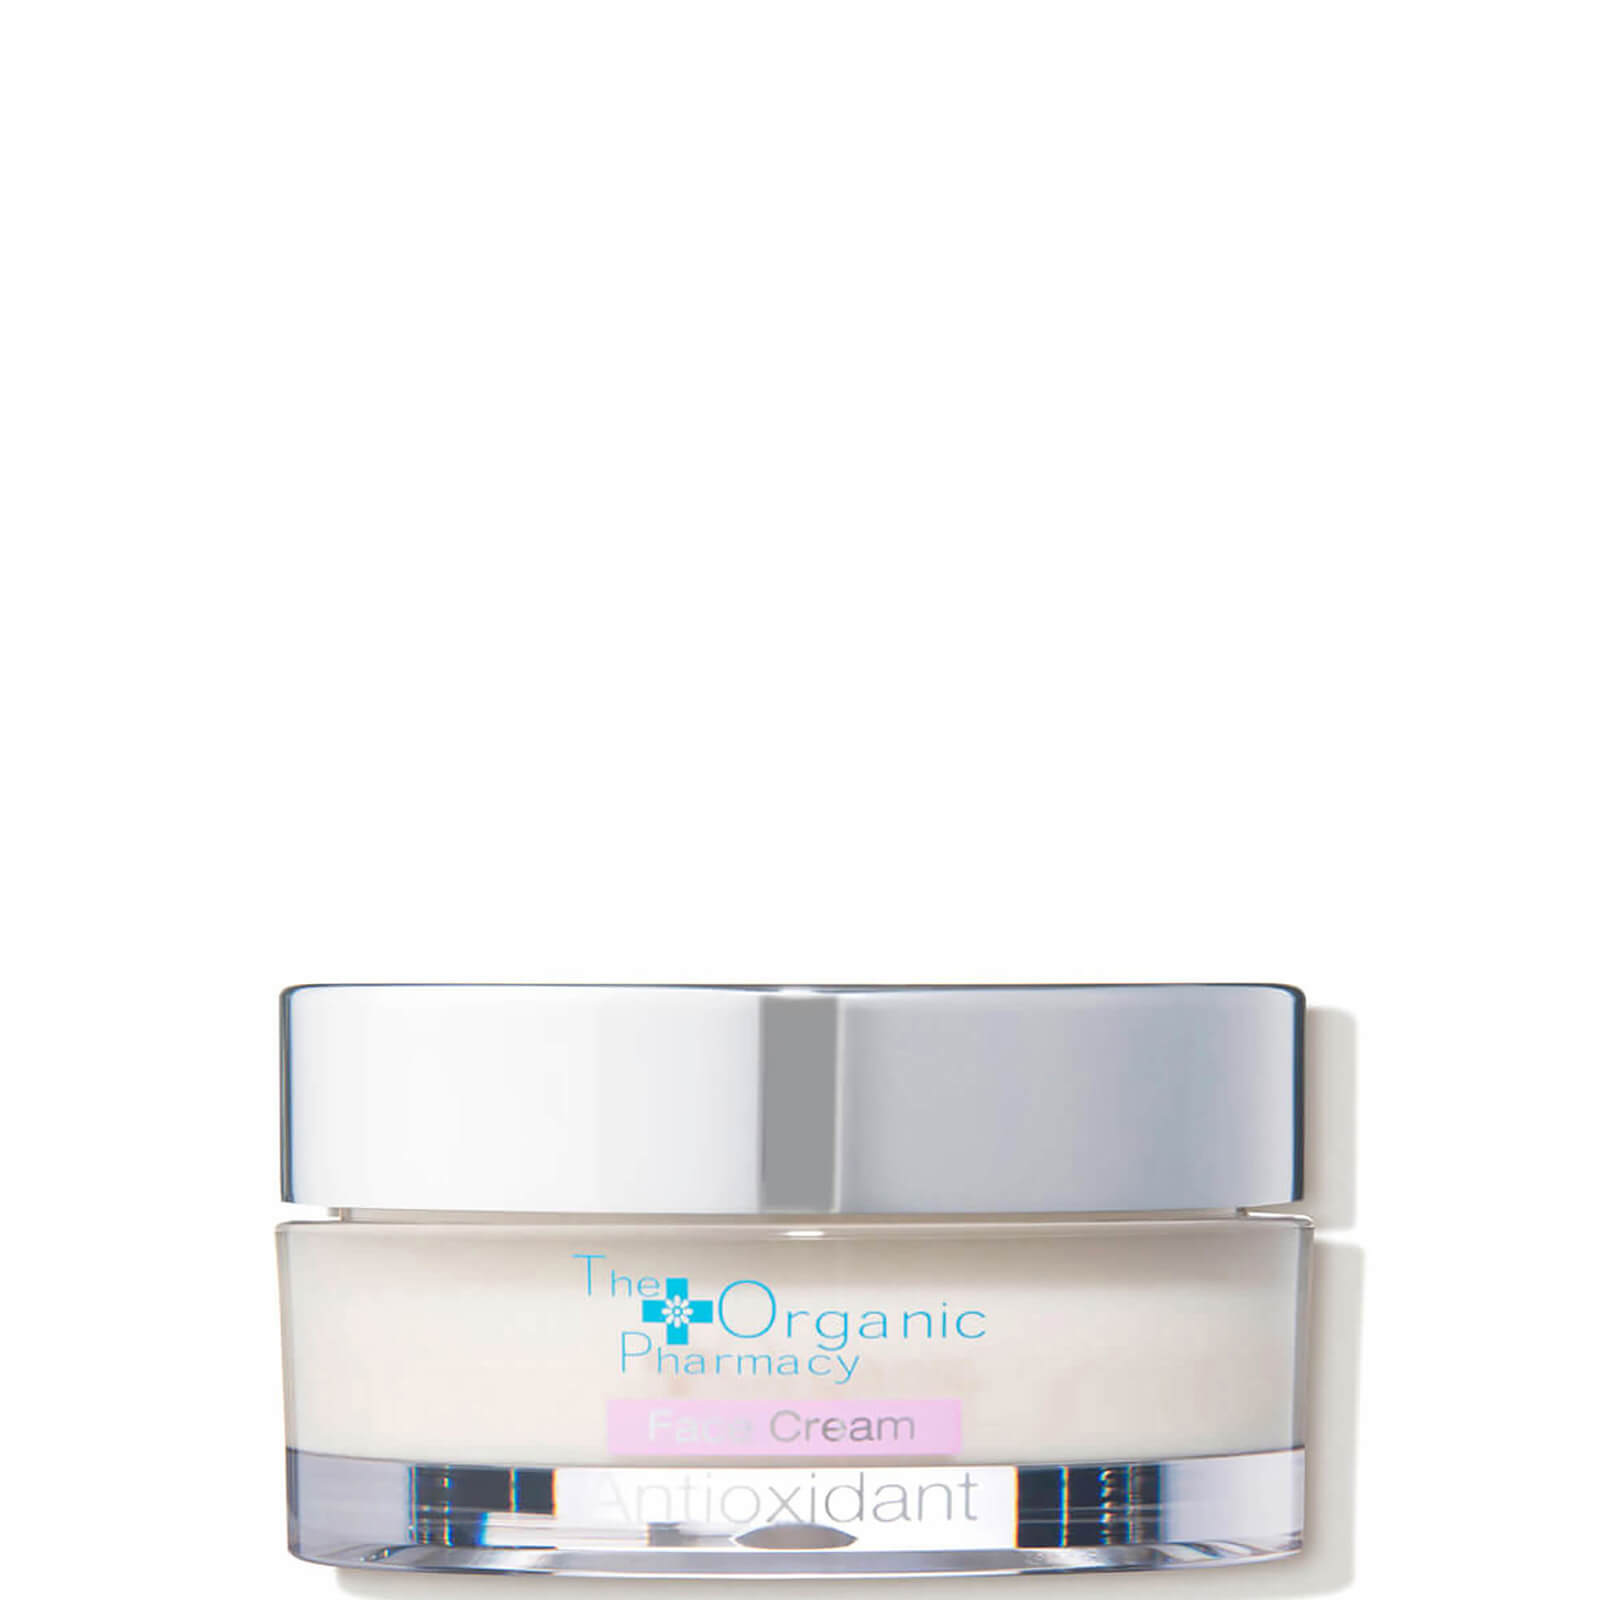 Image of The Organic Pharmacy Antioxidant Face Cream 50ml